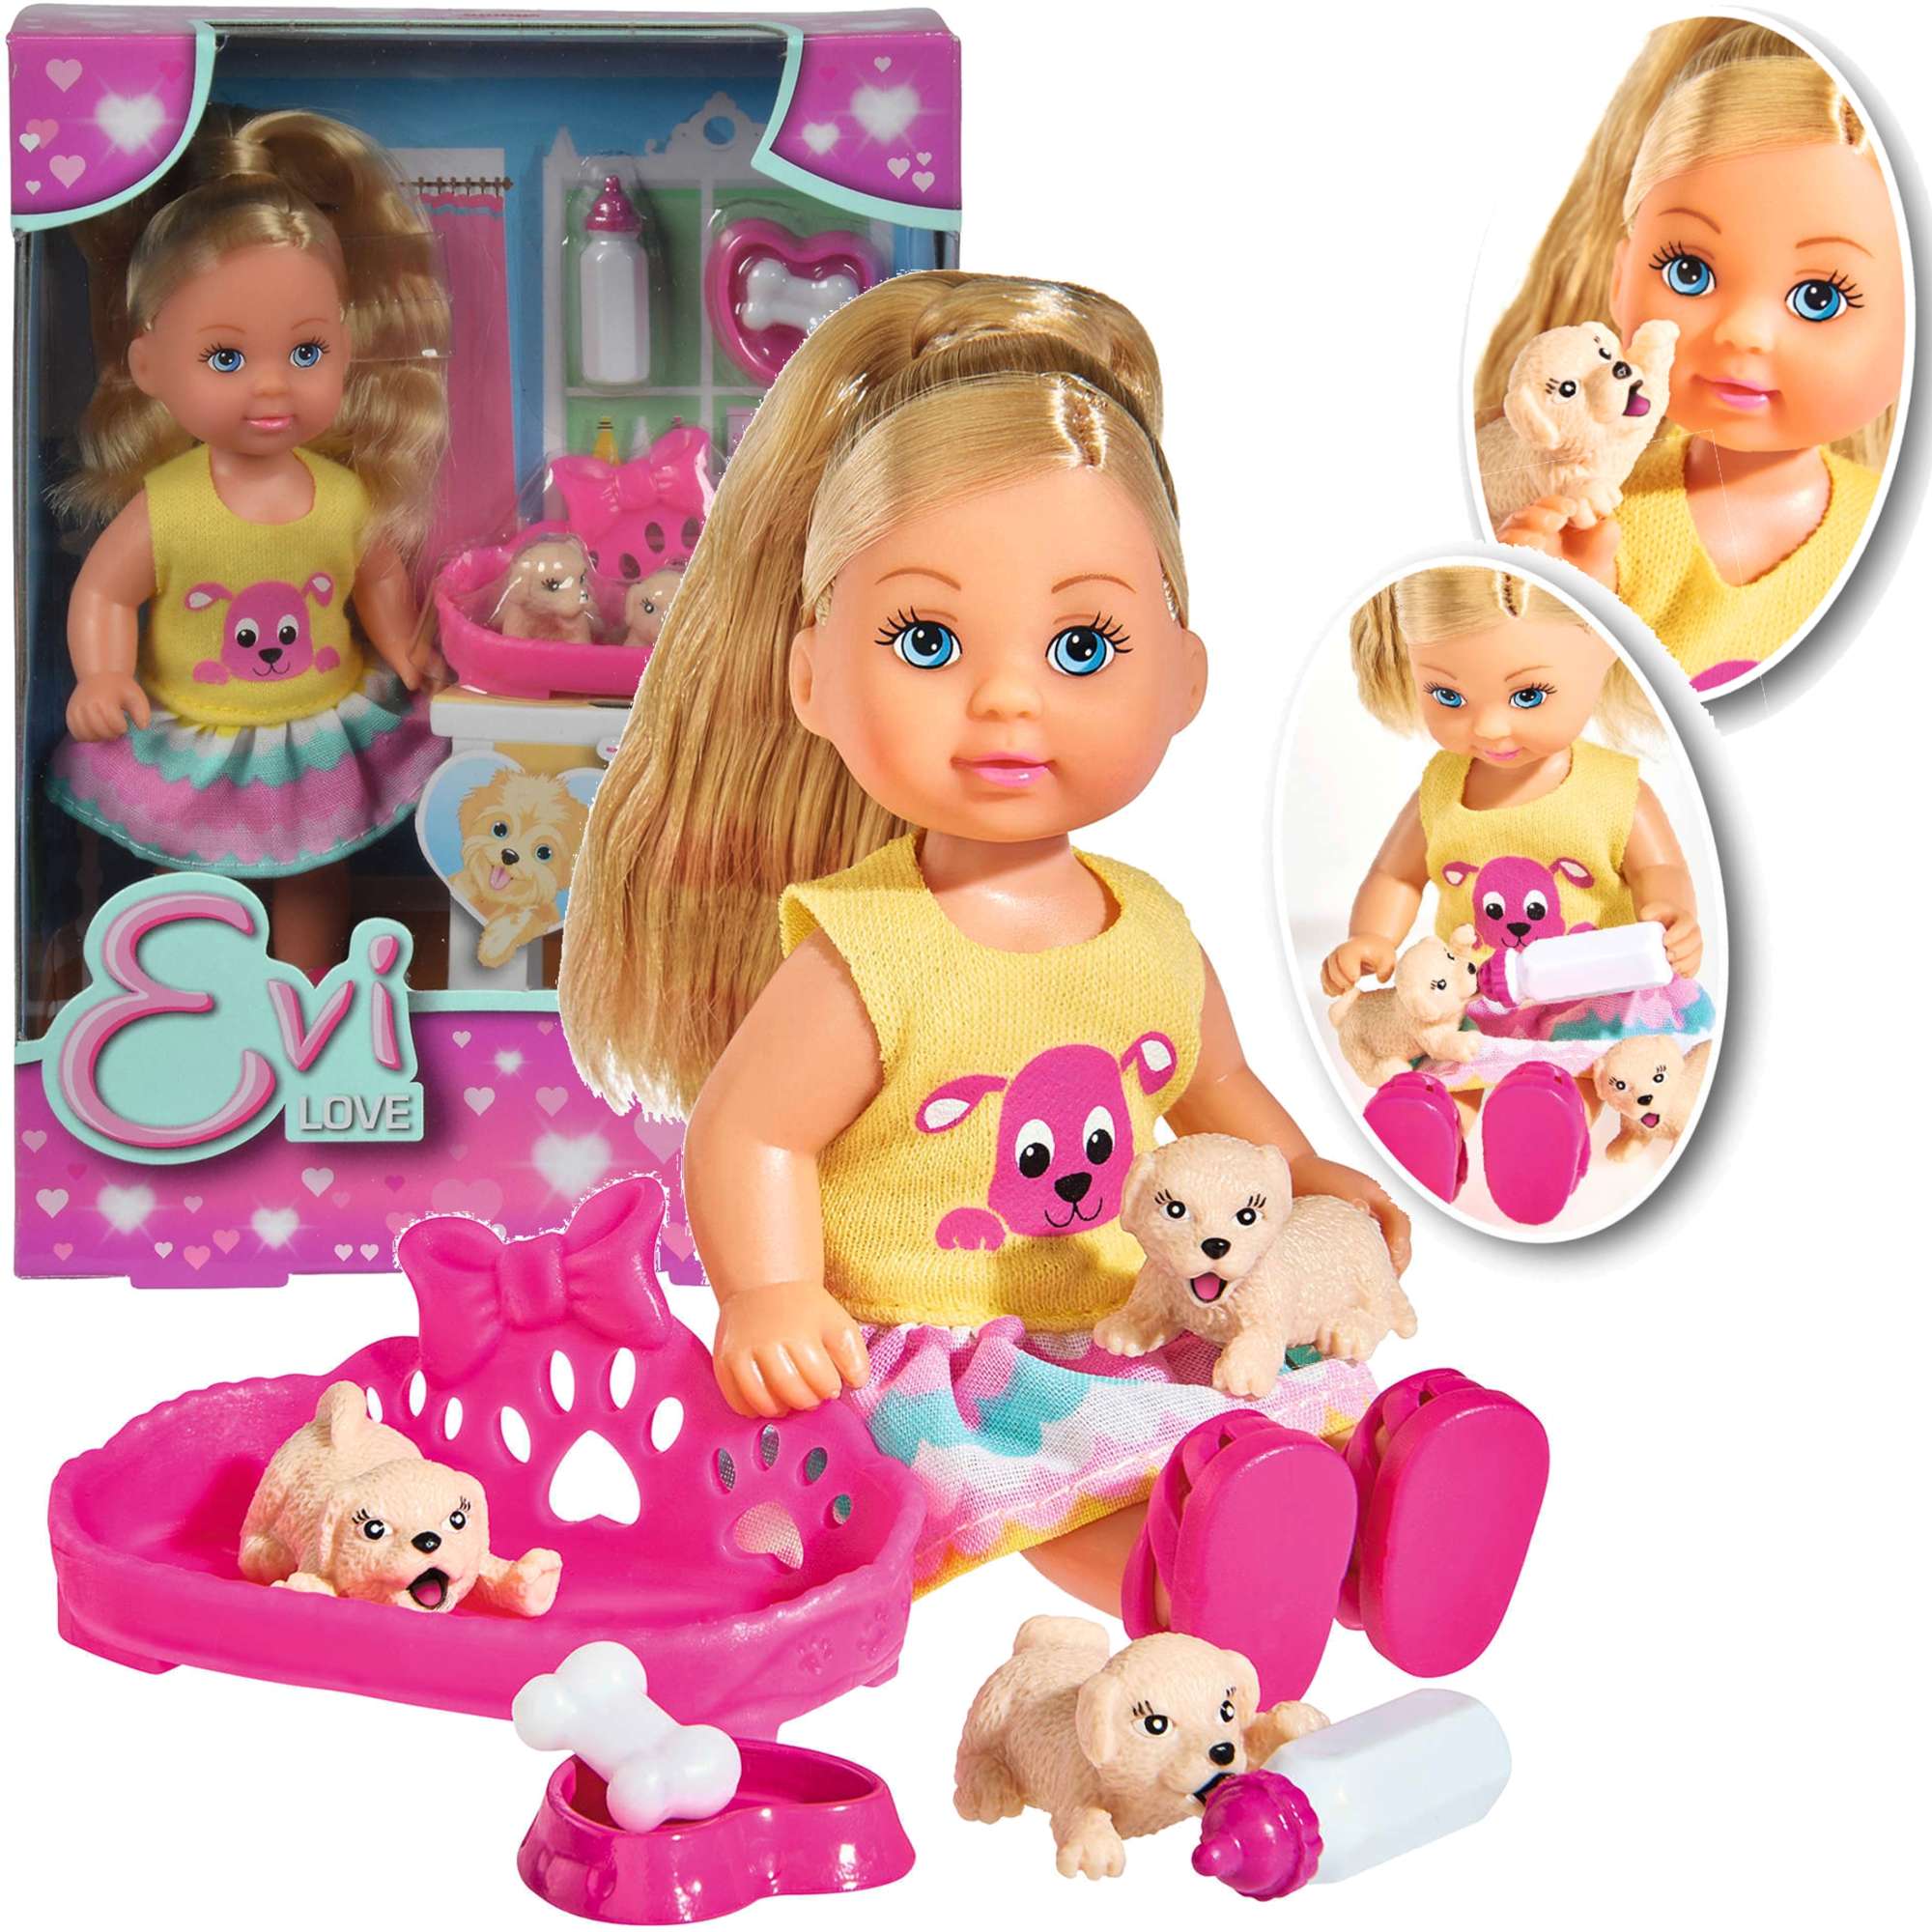 Simba Evi Love lalka ze szczeniaczkami